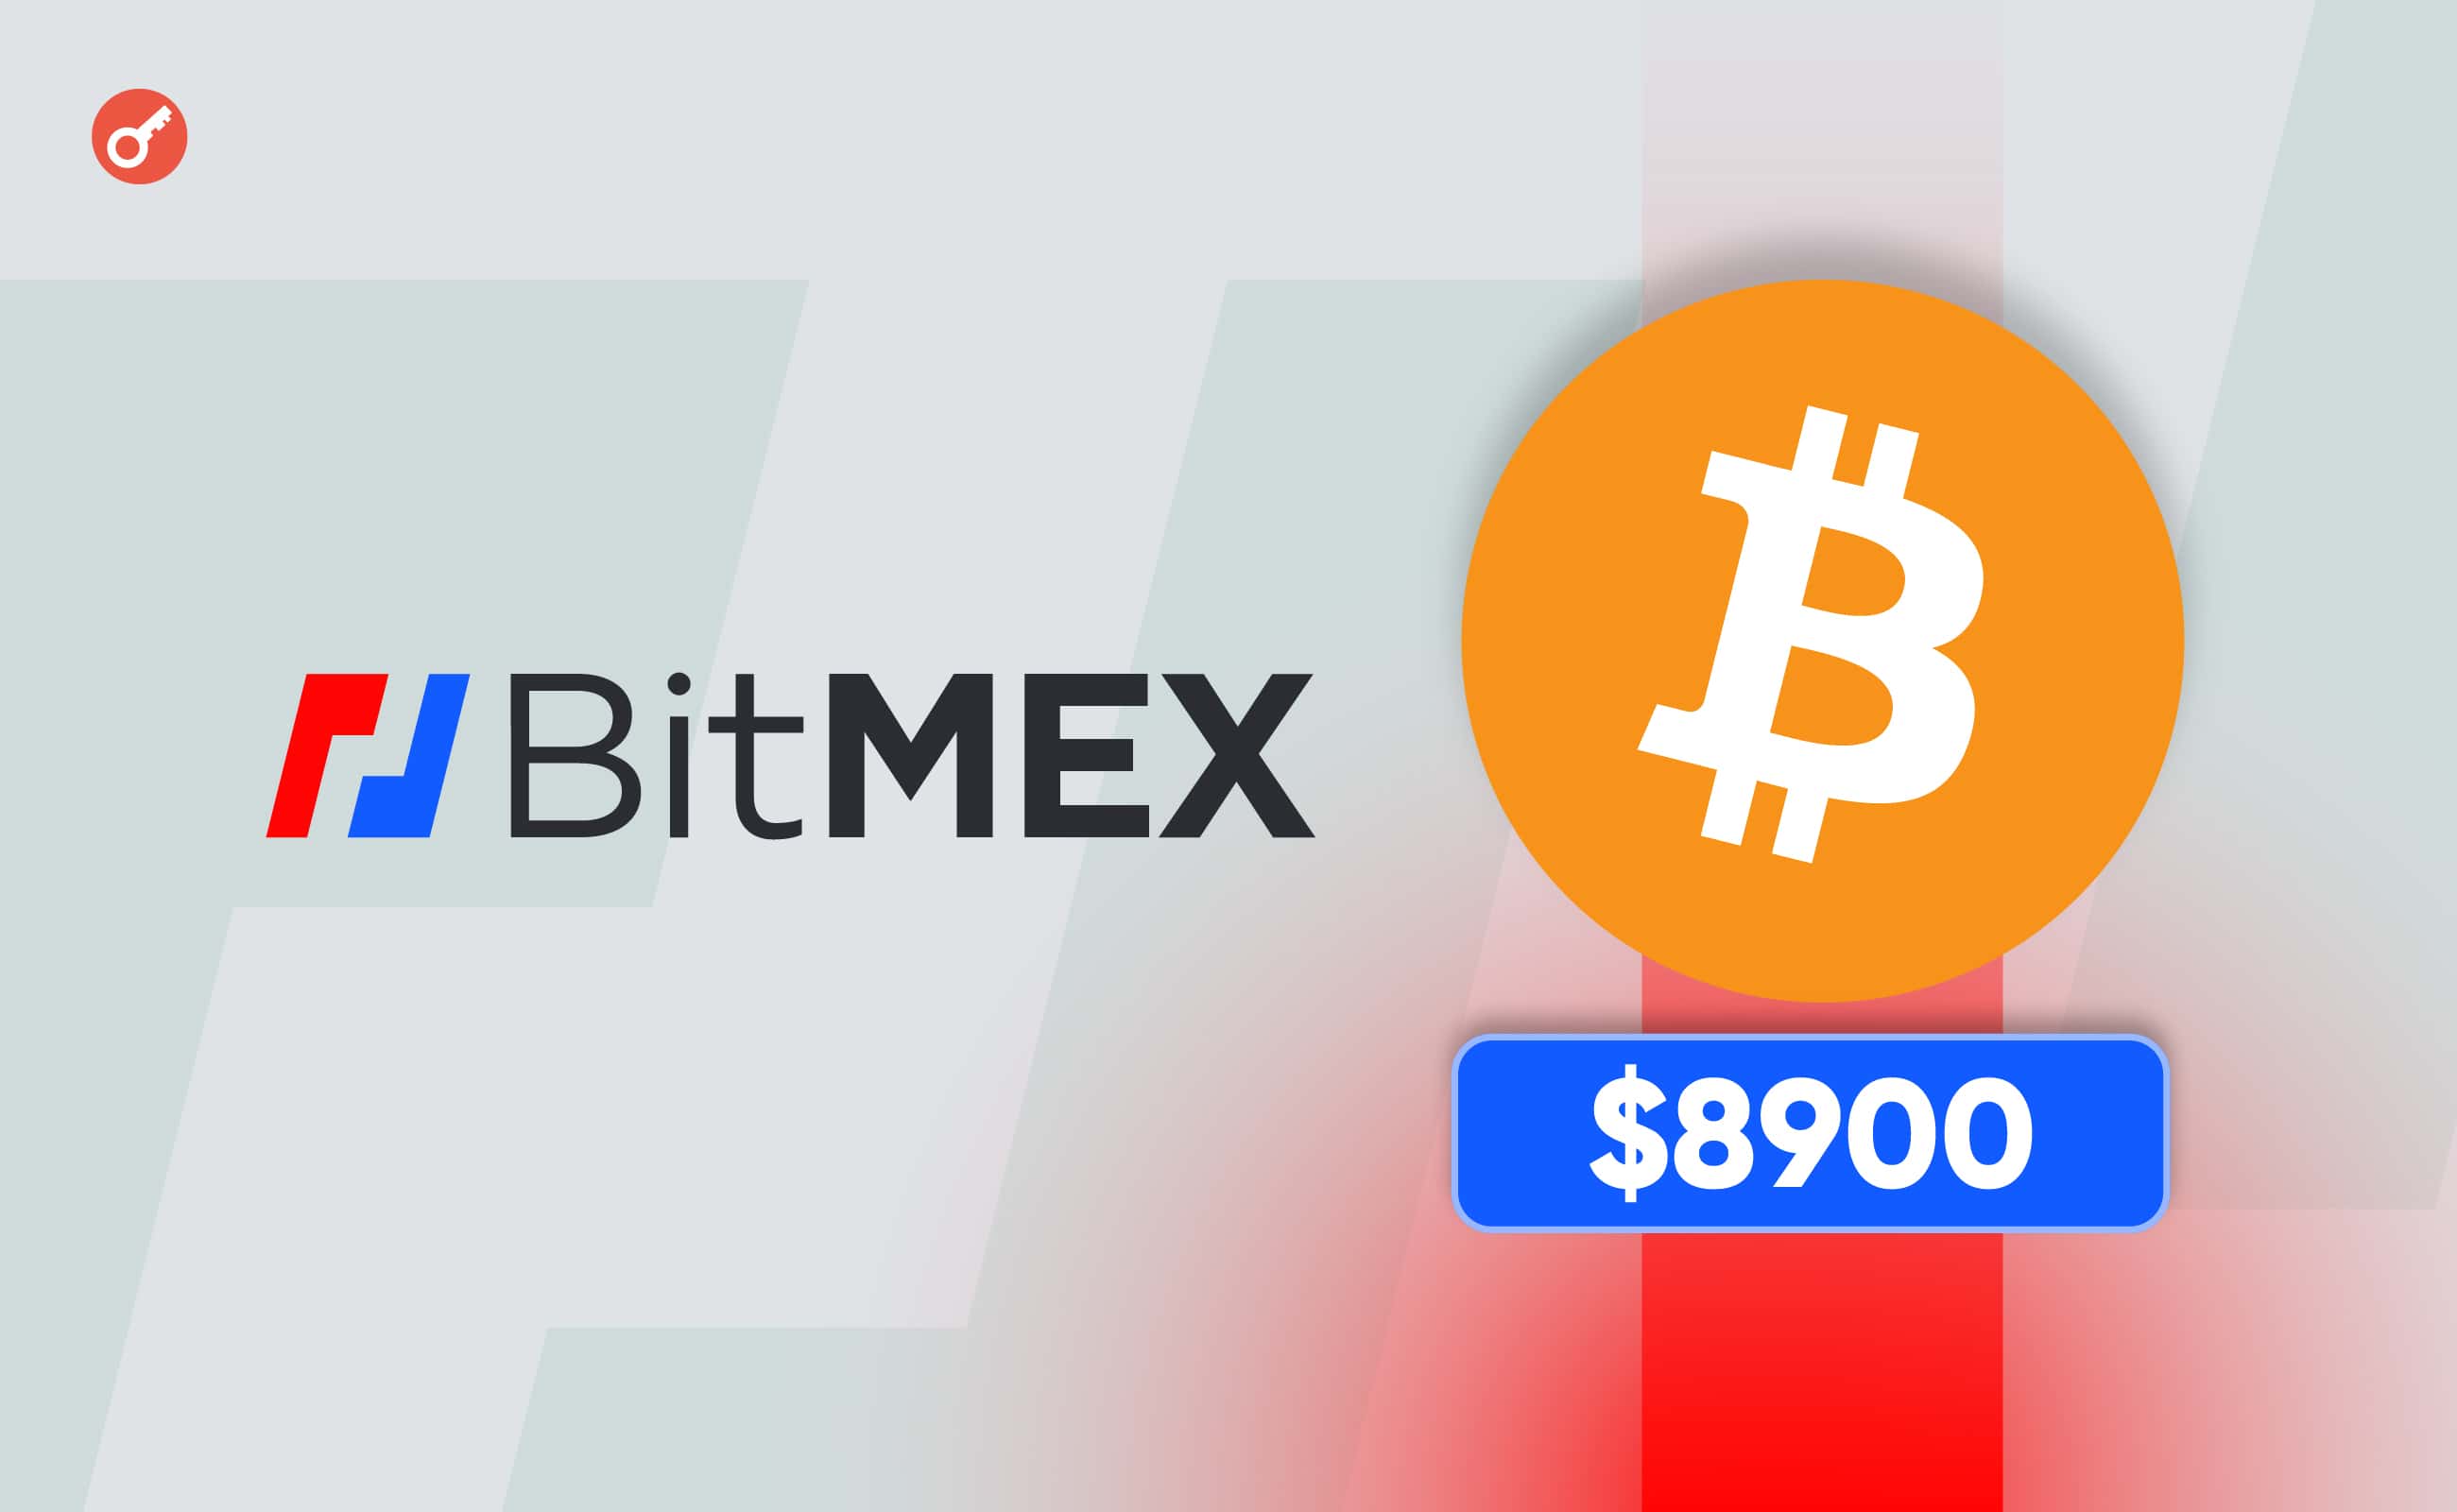 Bitcoin fell to $8,900 on the BitMEX exchange